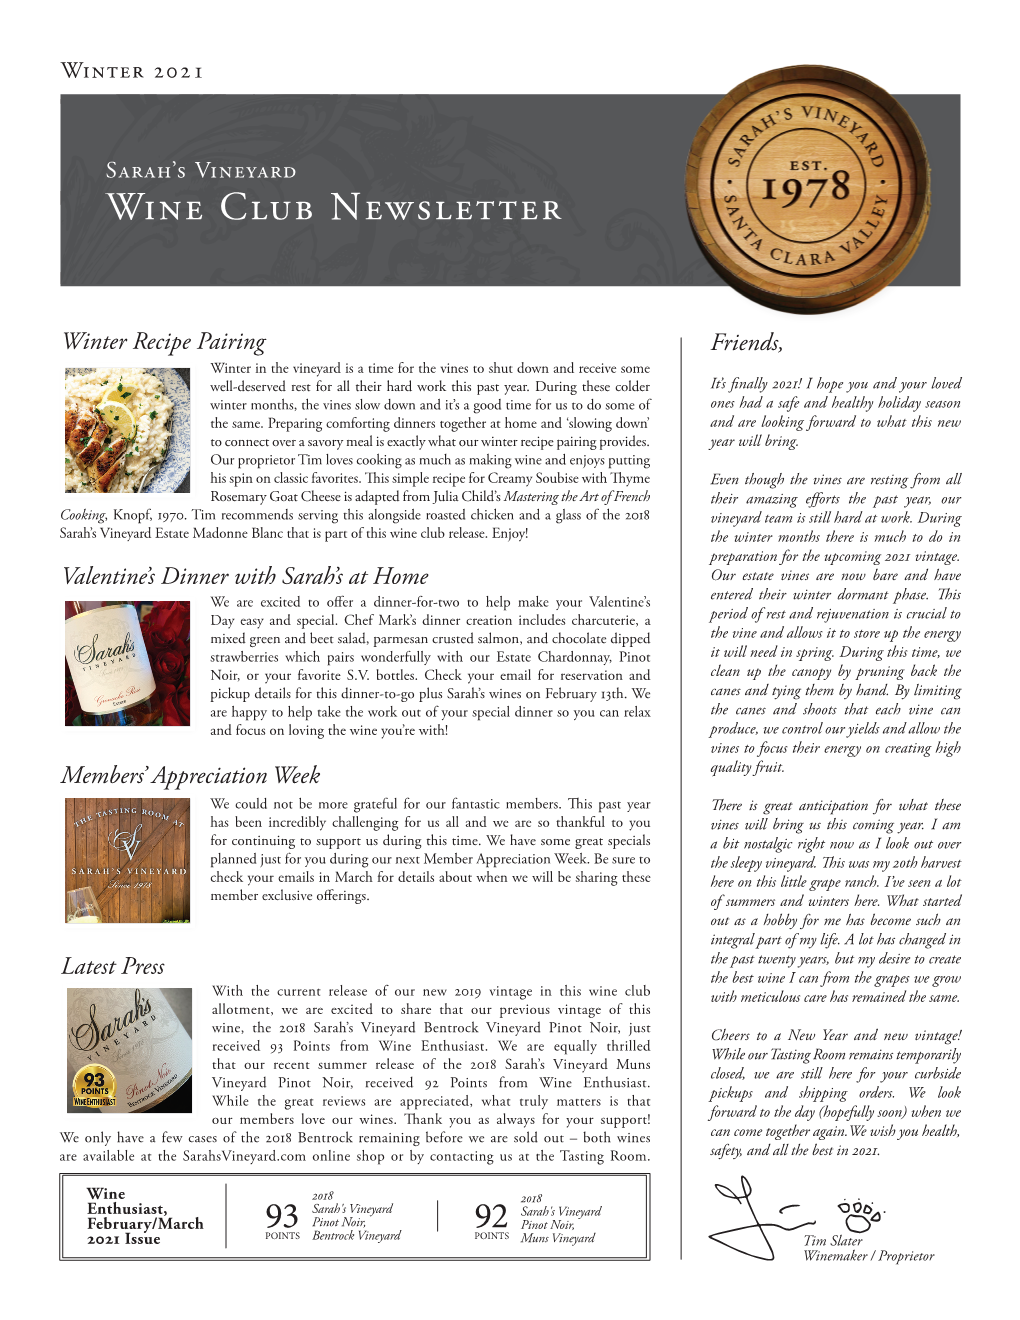 Sarah's Vineyard Wine Club Newsletter